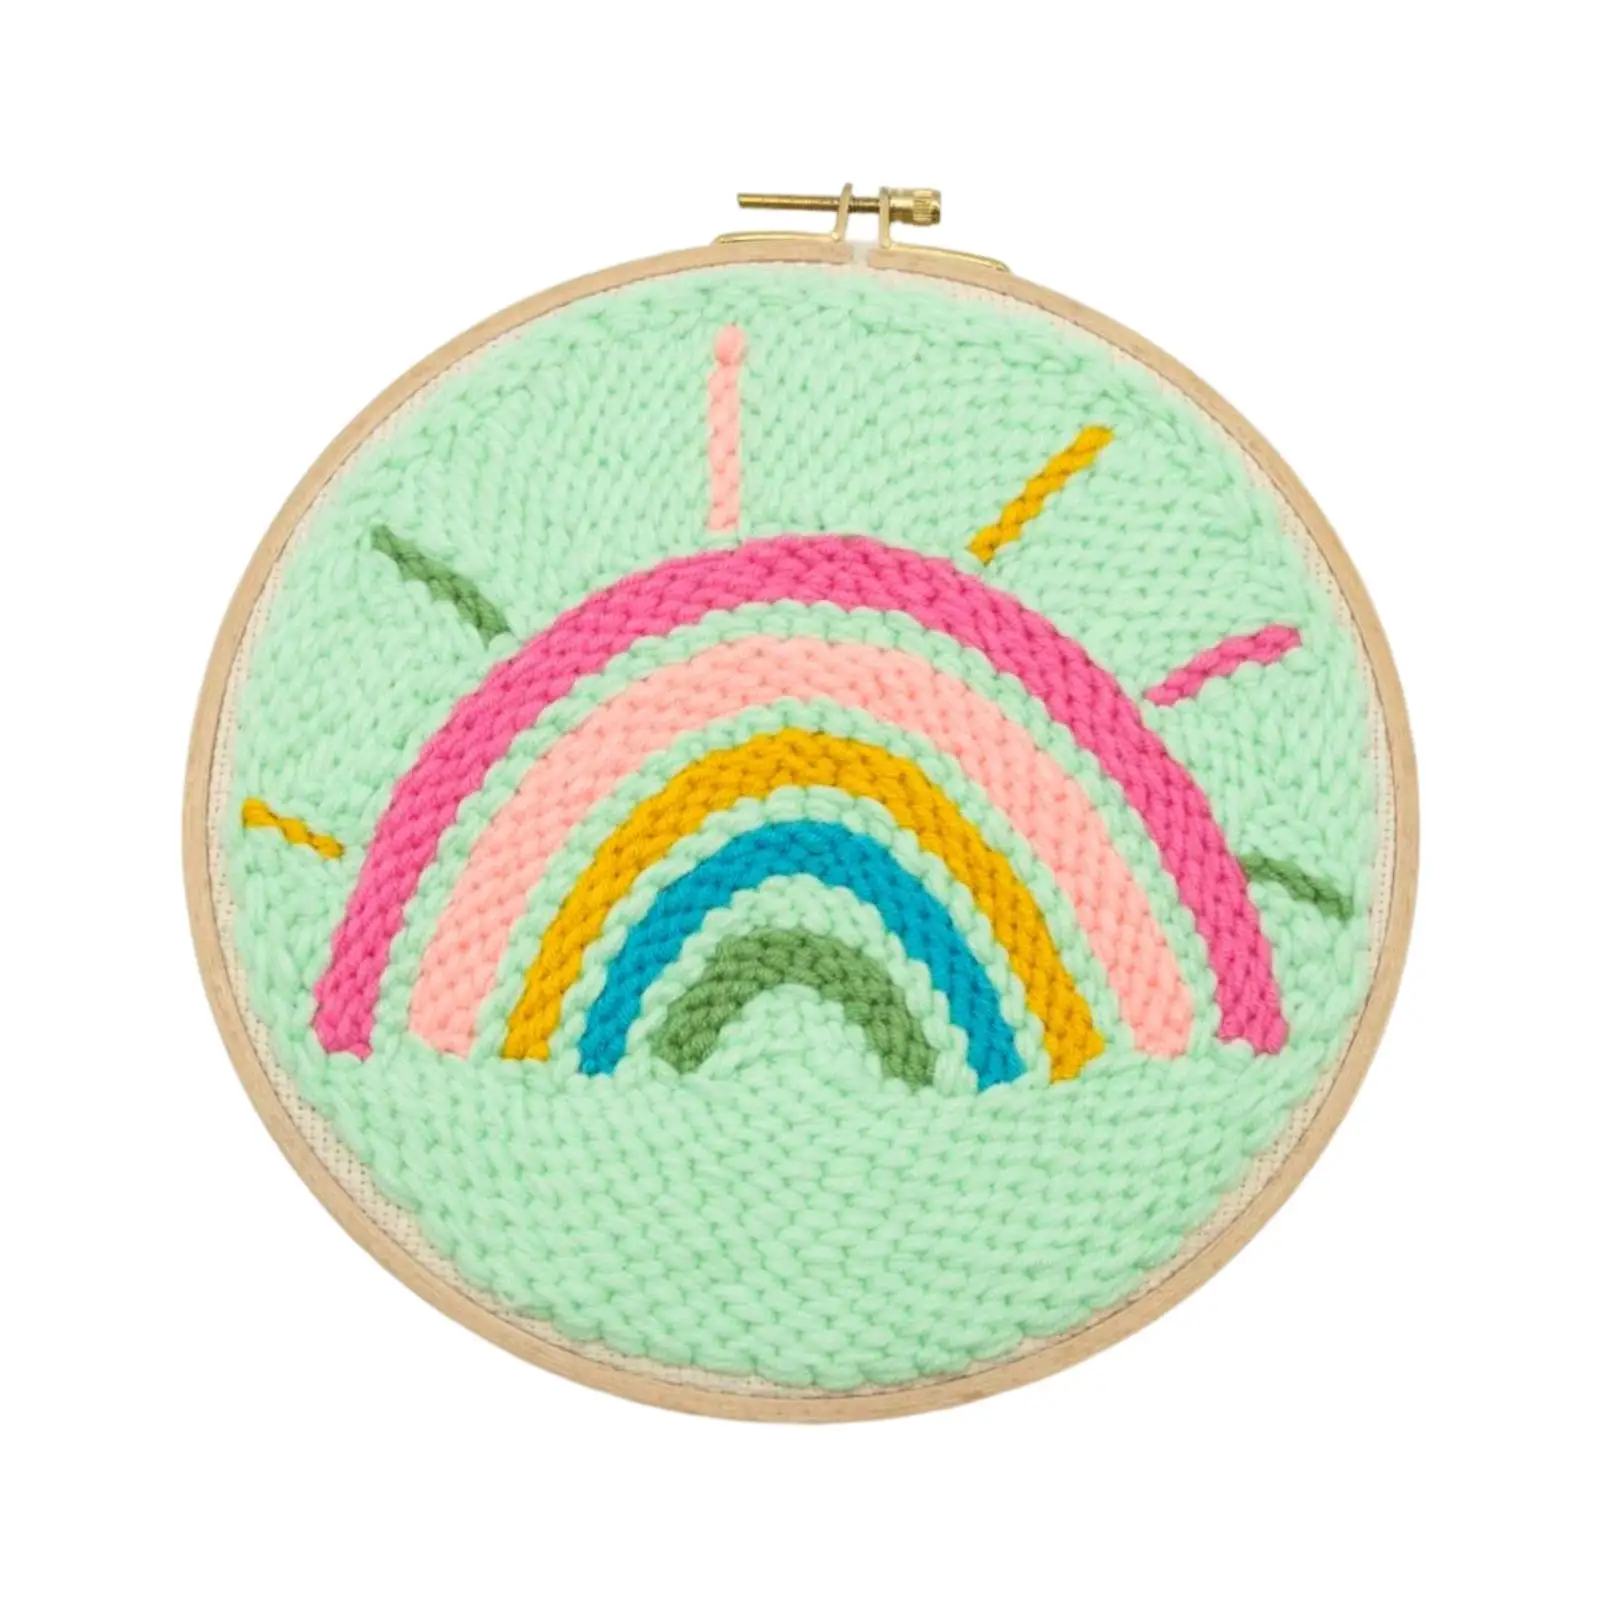 Punch Needle Embroidery Starter Kits Rainbow Landscape DIY Needlework Beginner